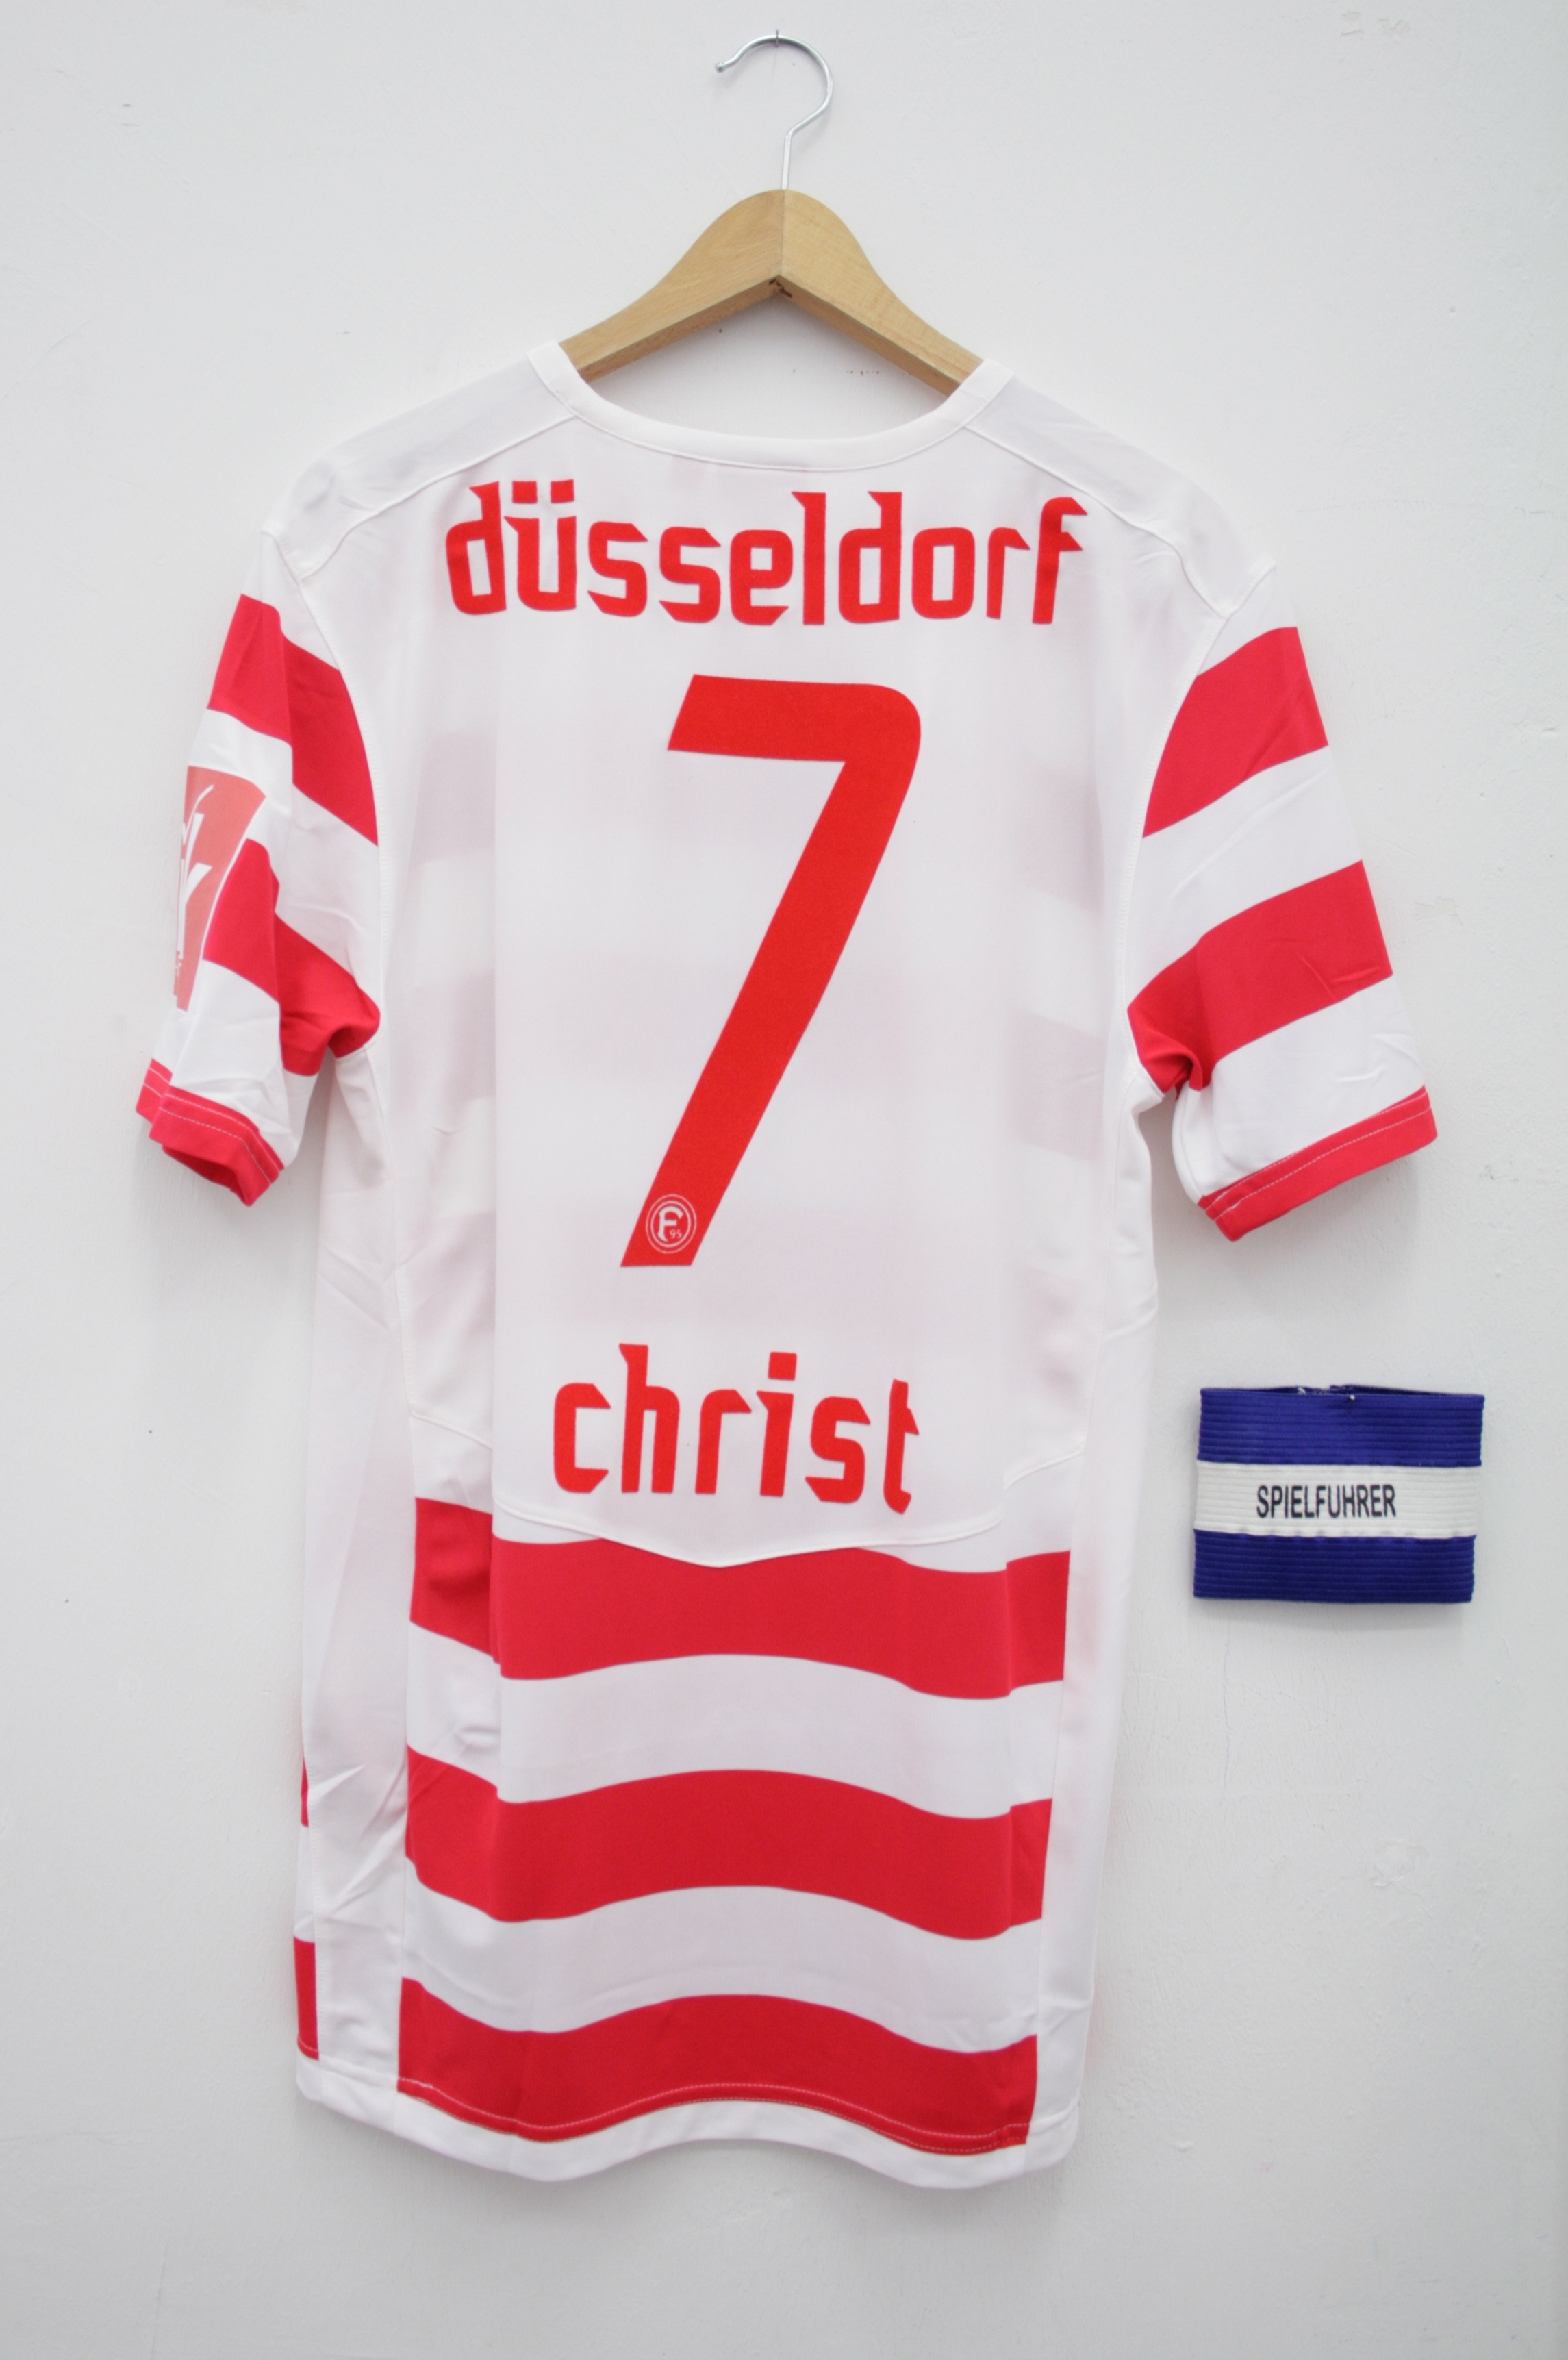 Düsseldorf 7 Christ